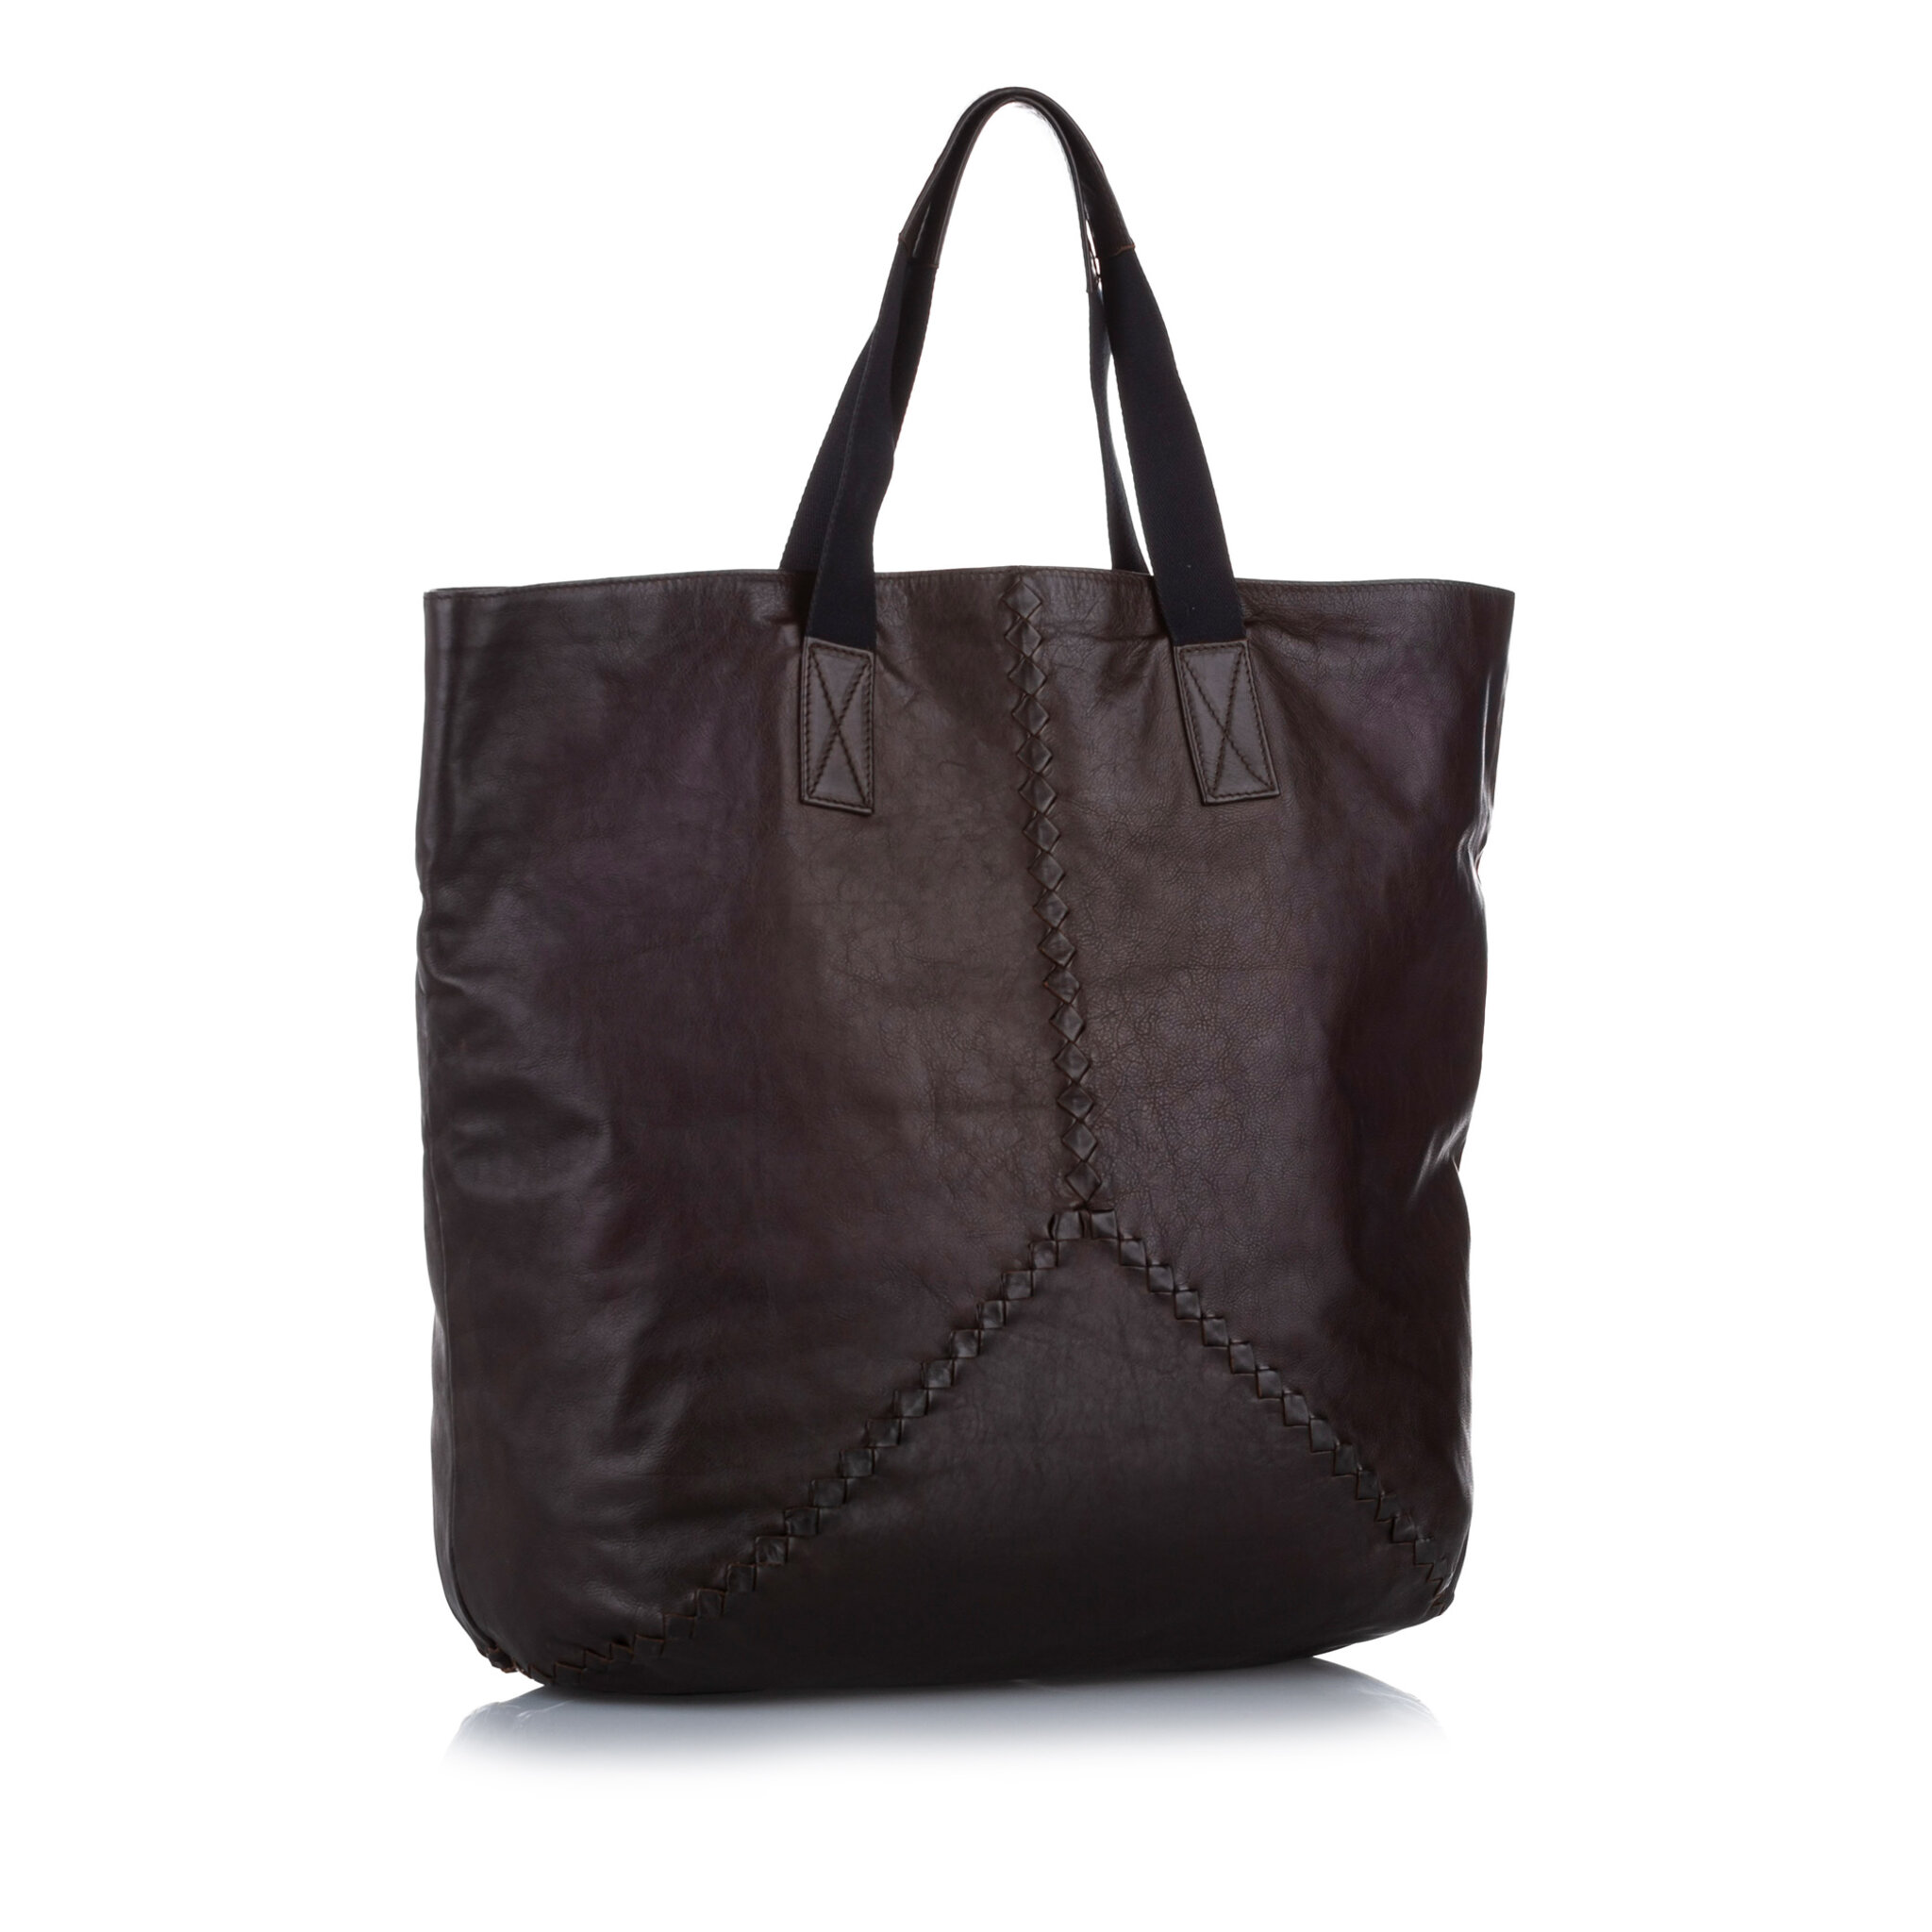 Bottega Veneta Leather Tote Bag, dark brown